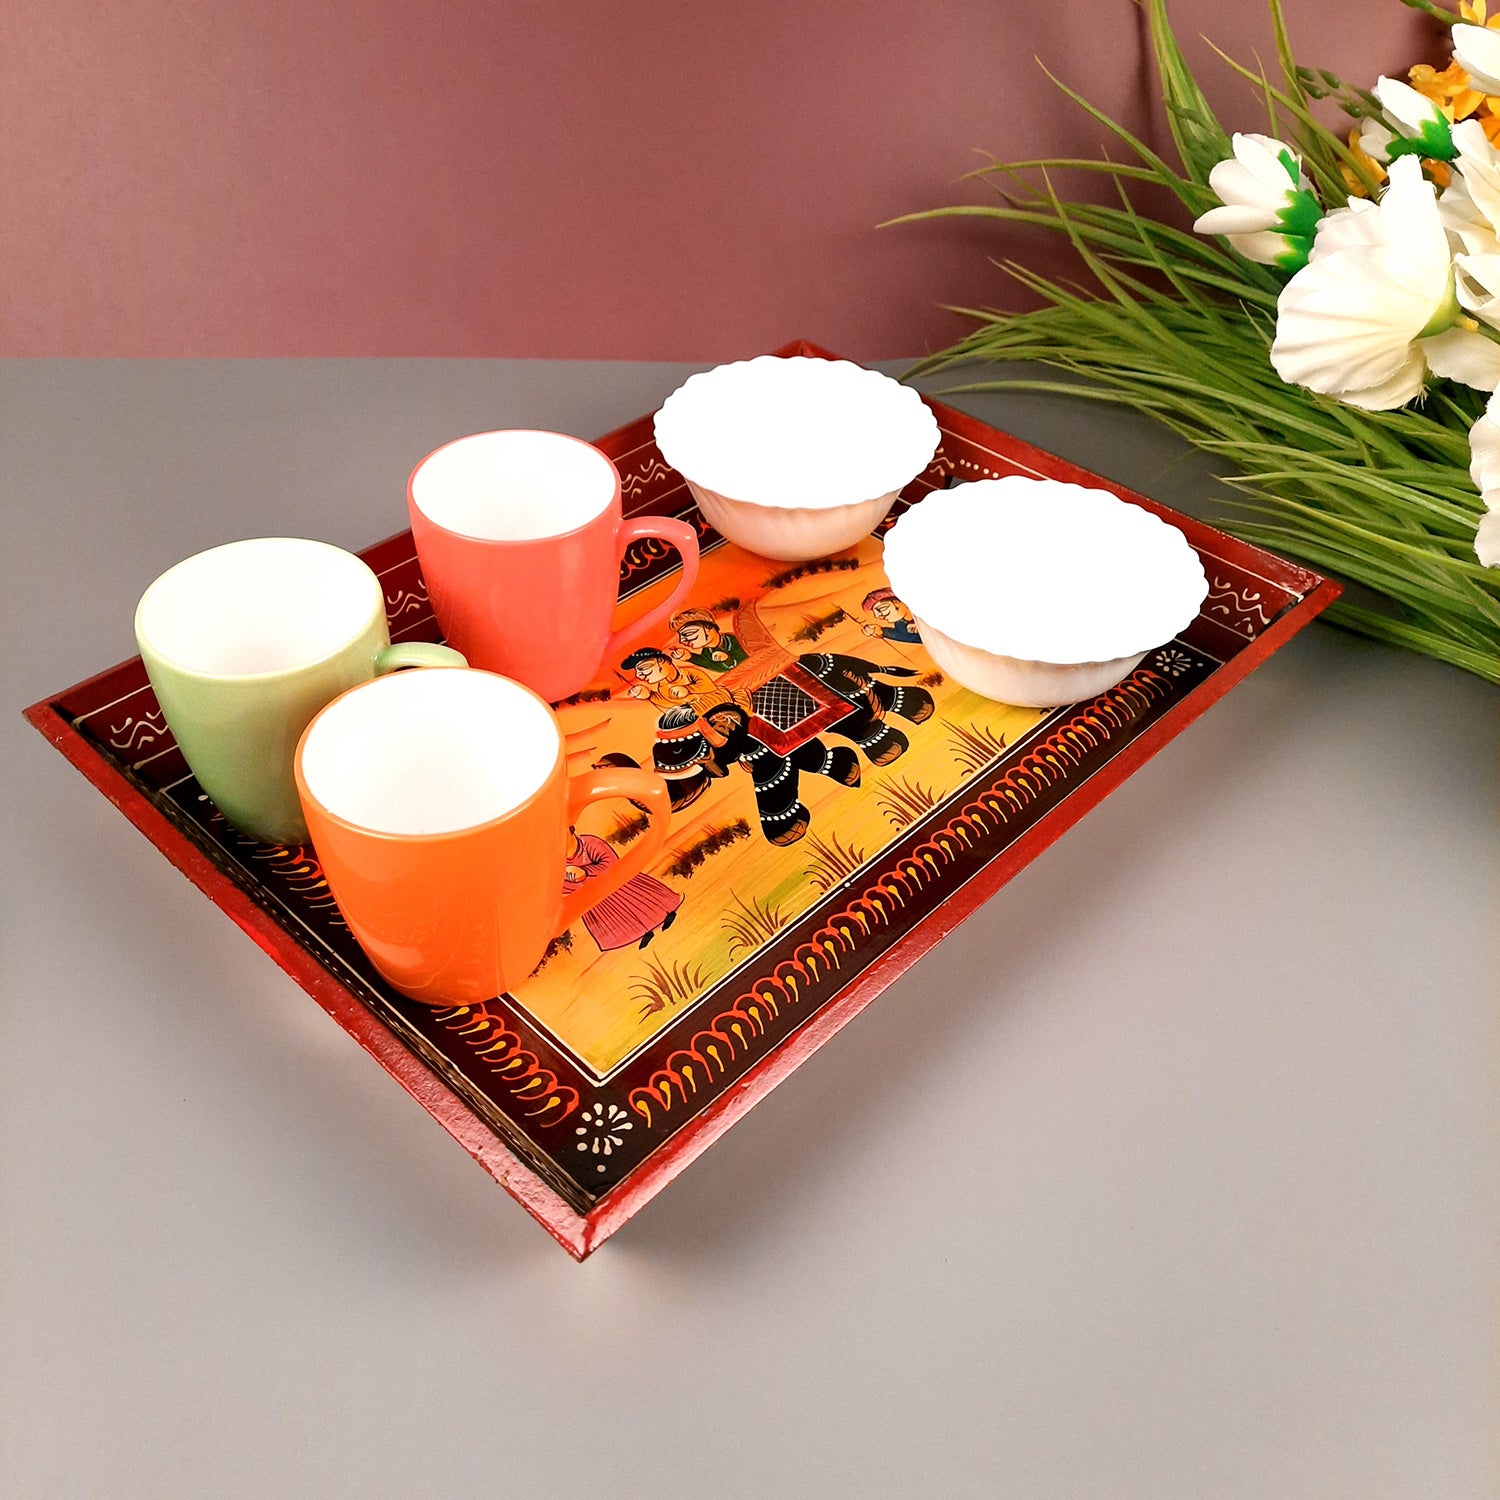 Serving Tray Set | Wooden Tea Tray | Serving Platter - For Dining & Serving, Home, Table, Kitchen Decor - Set of 3 - Apkamart